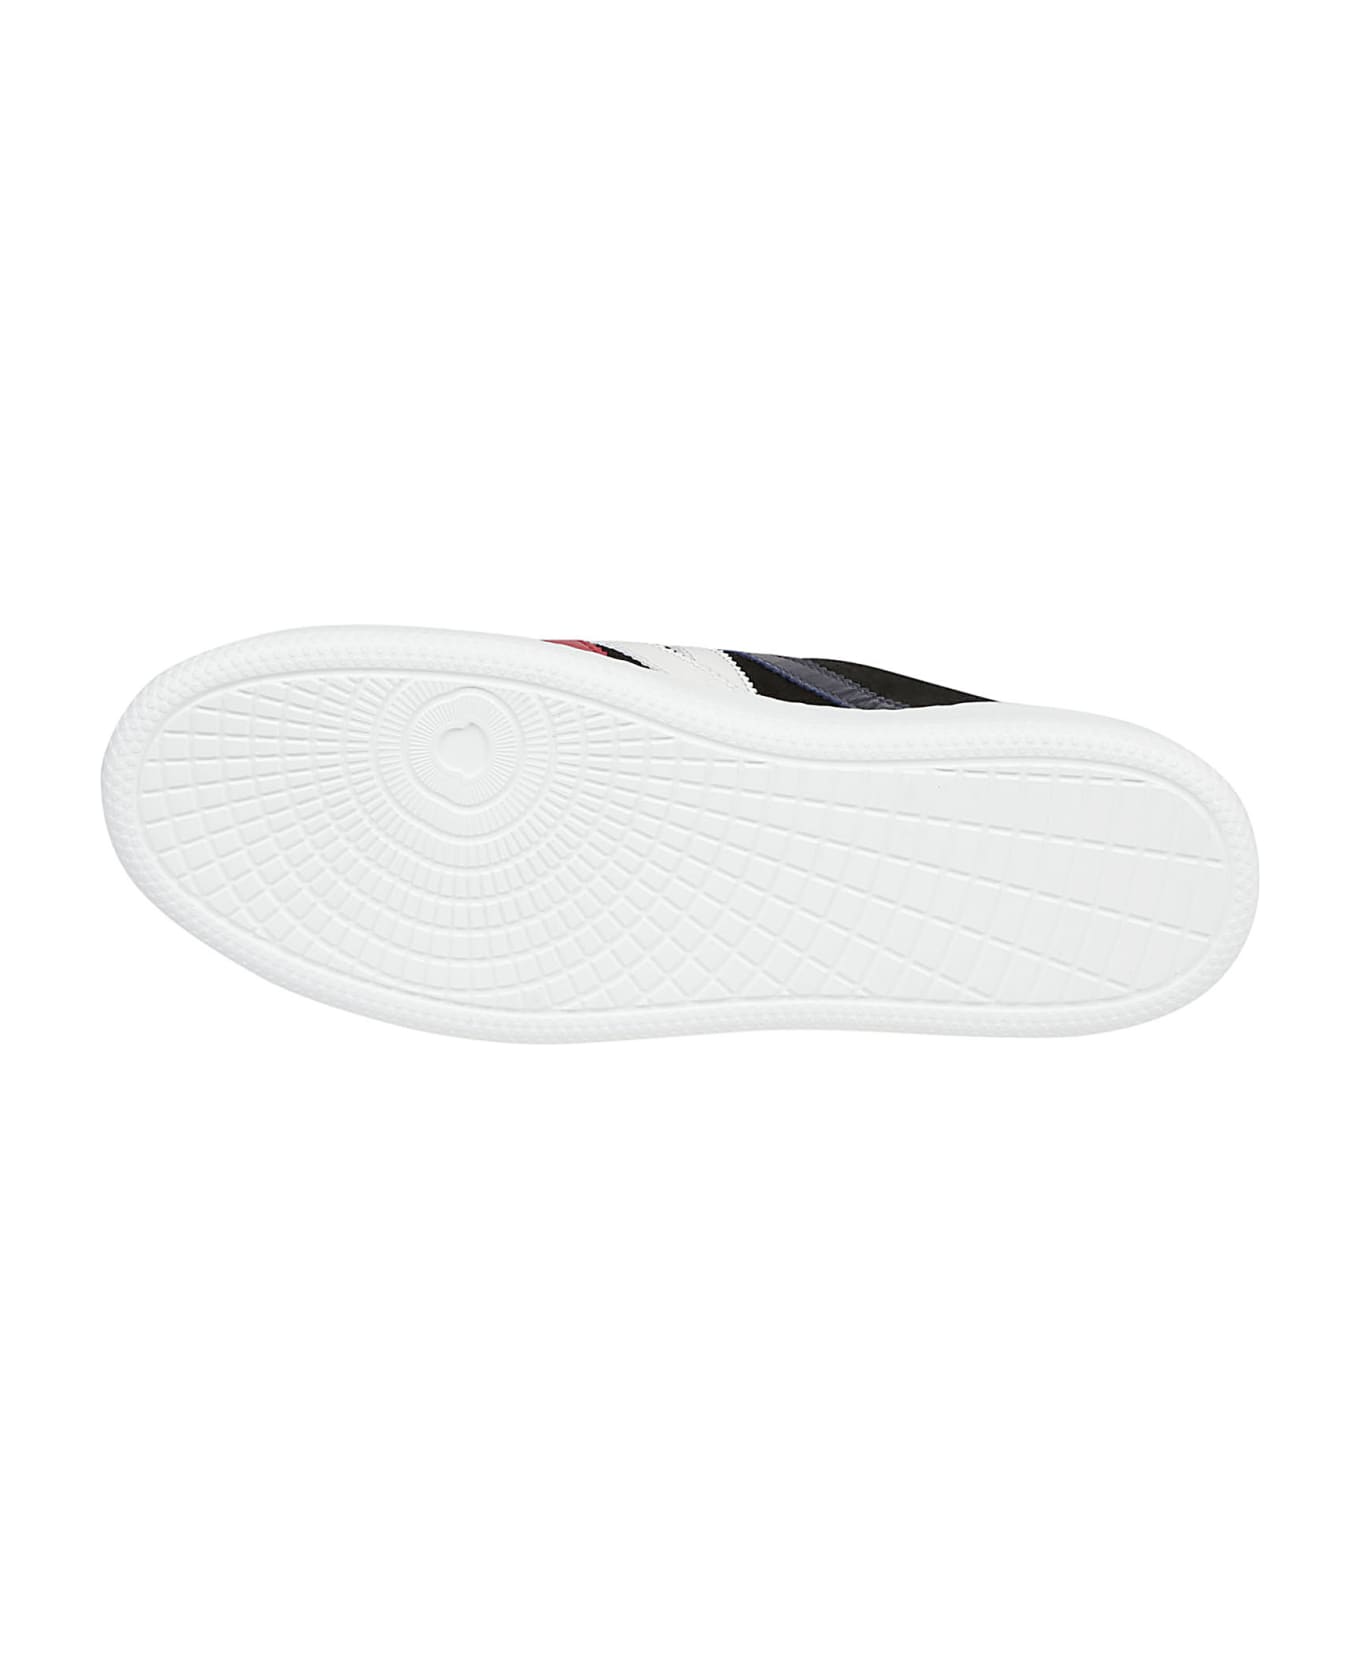 Moncler Monaco M Low Top Sneakers - Nero/bianco